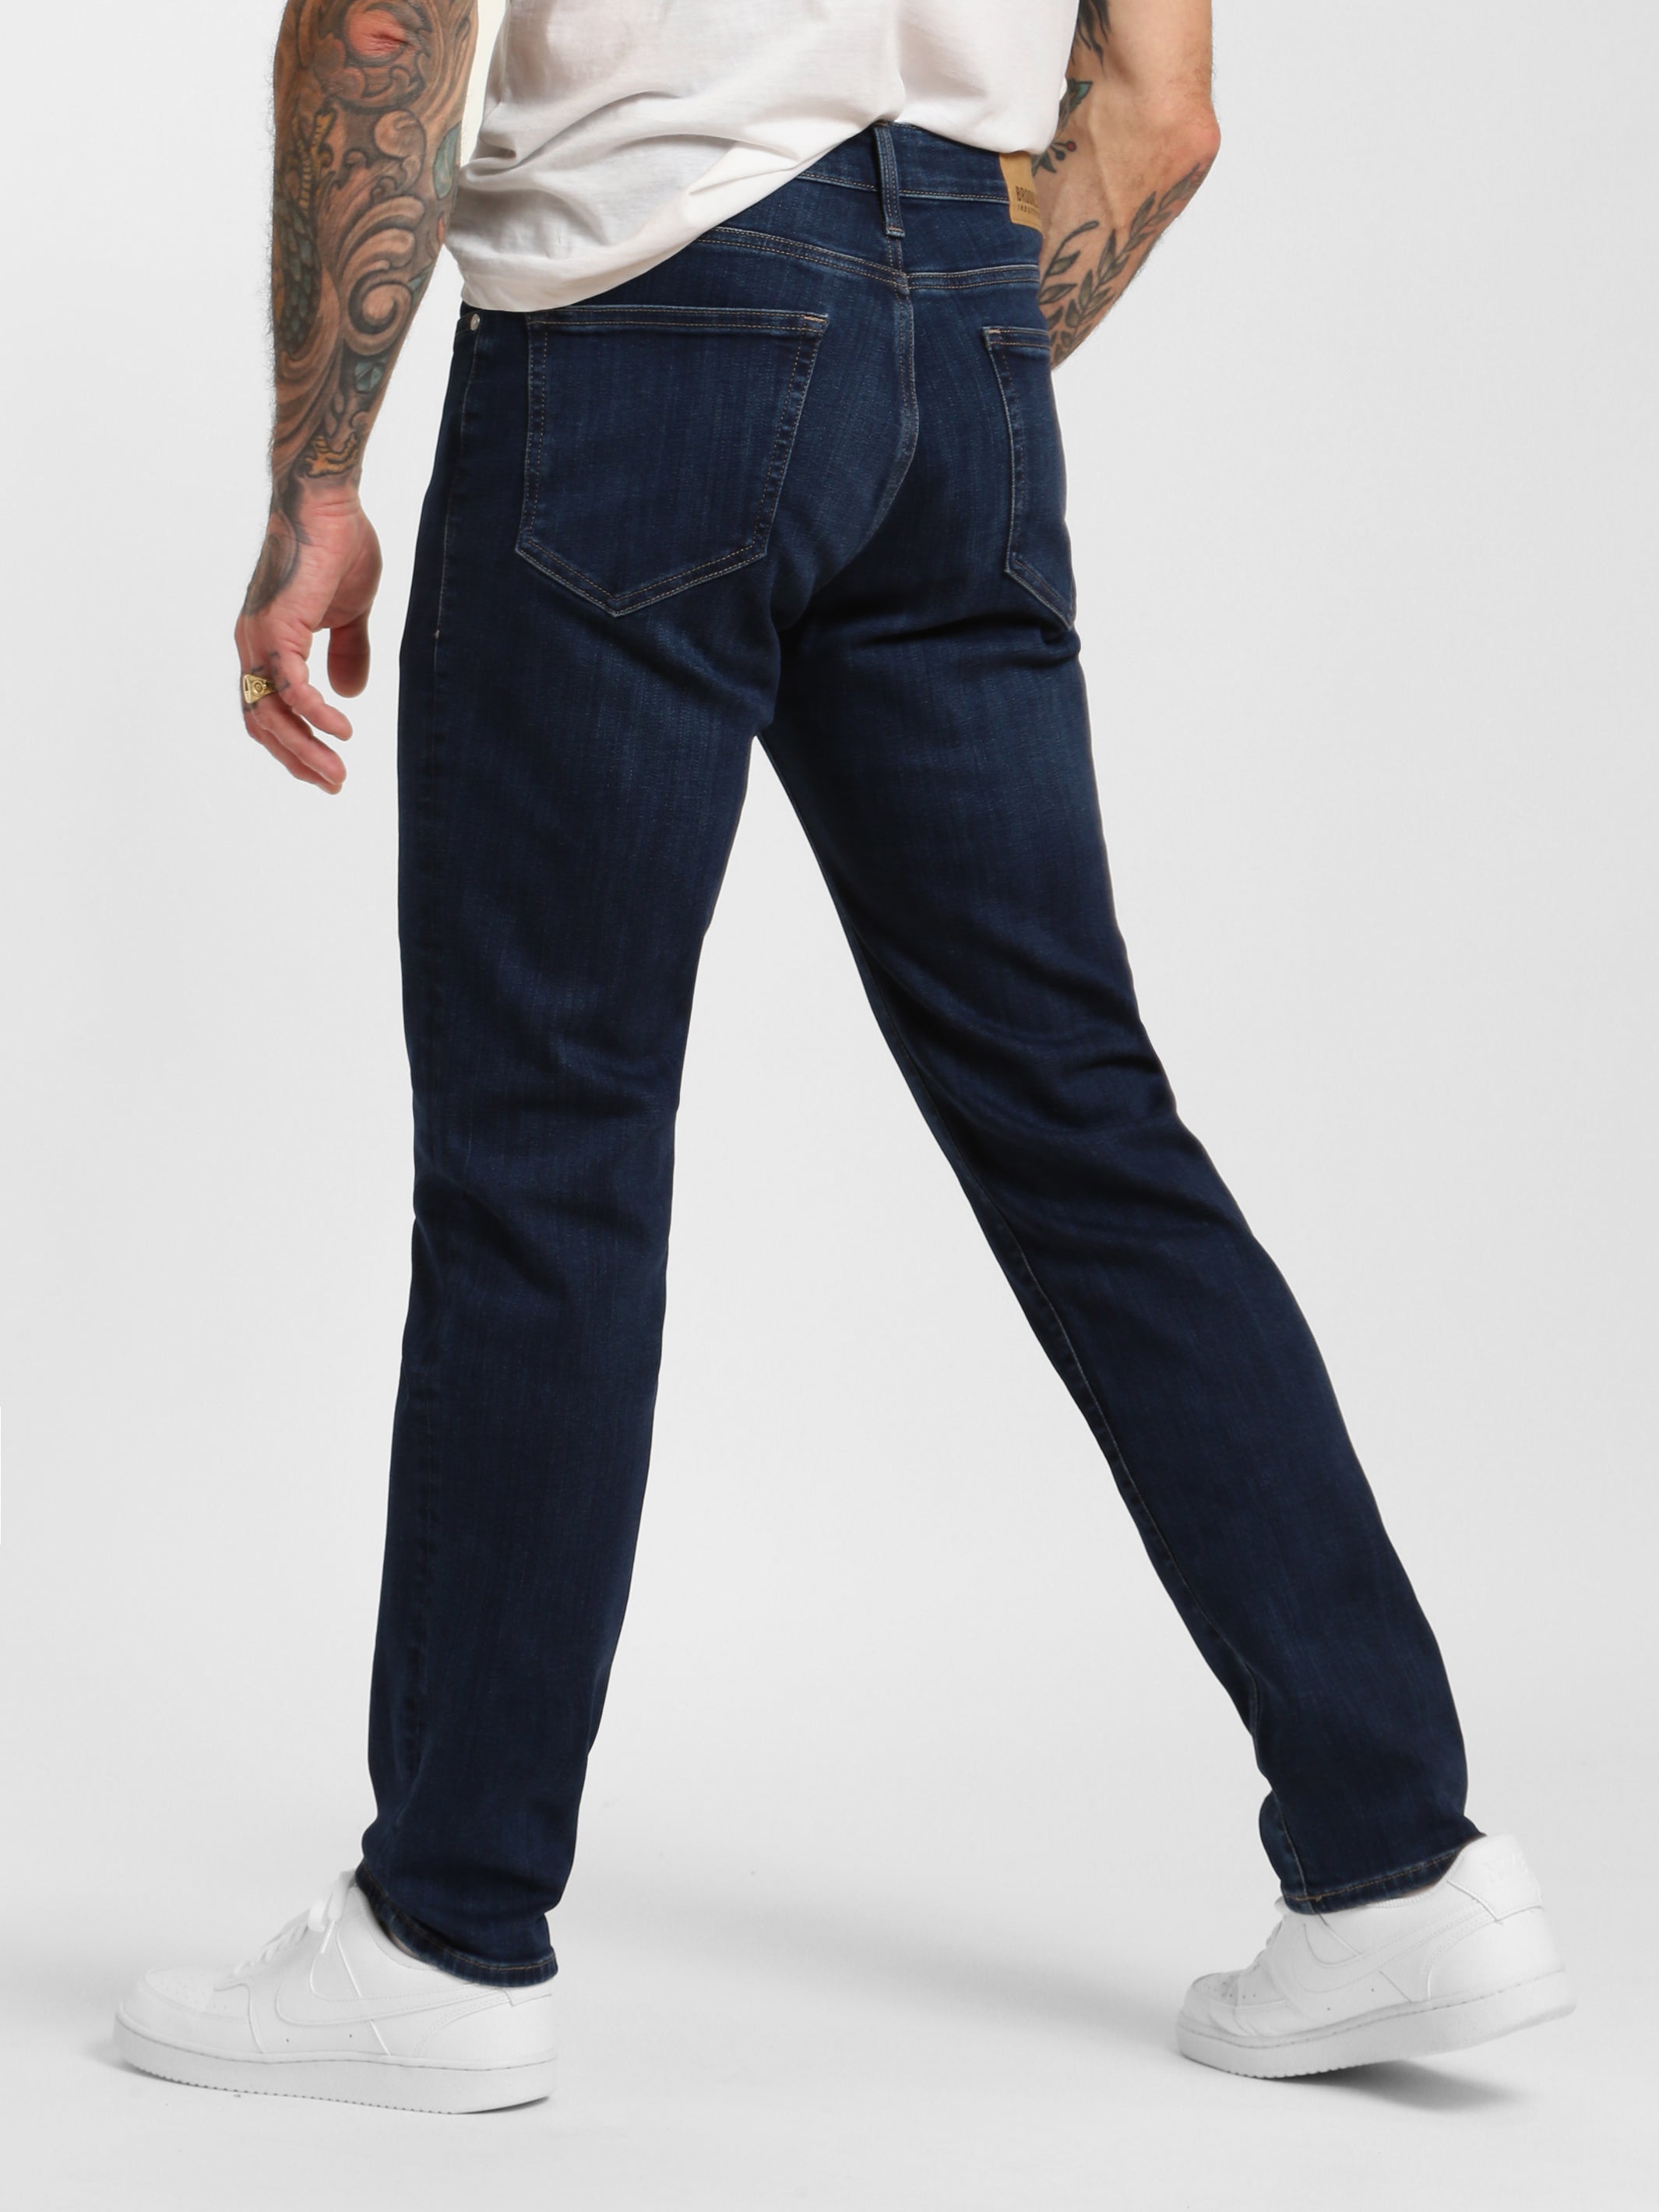 Franklin Athletic Fit Jeans in Dark Denim - BROOKLYN INDUSTRIES